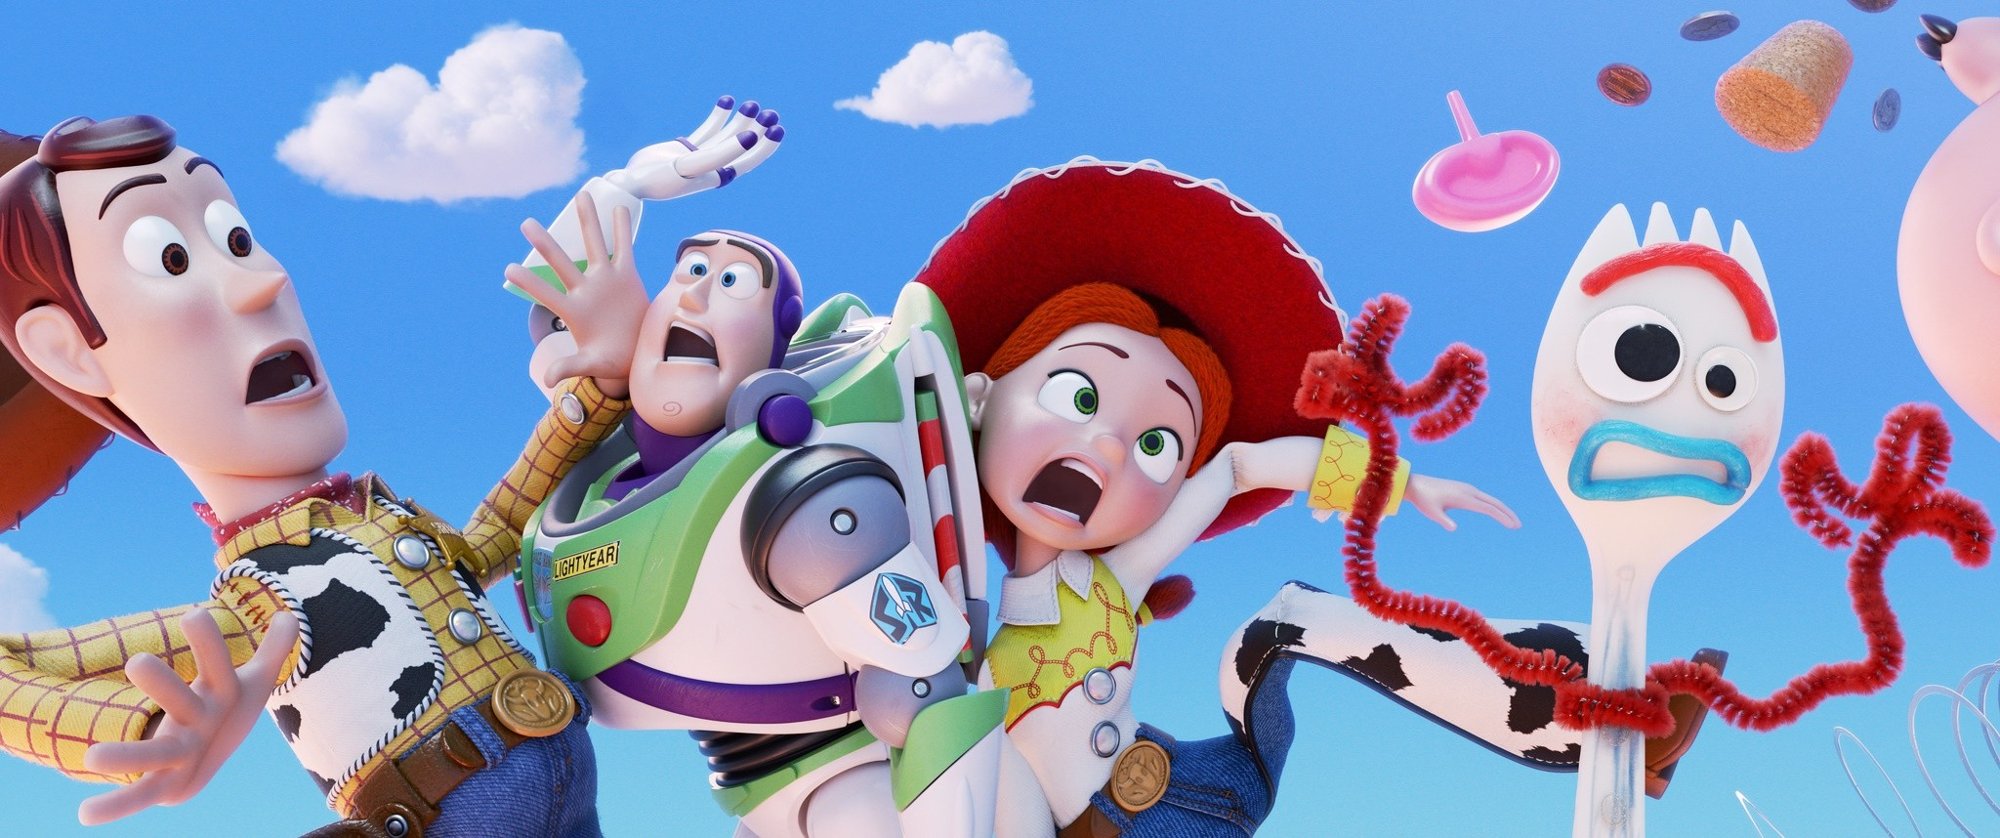 Woody, Buzz Lightyear, Jessie and Forky from Pixar Animation Studios' Toy Story 4 (2019)